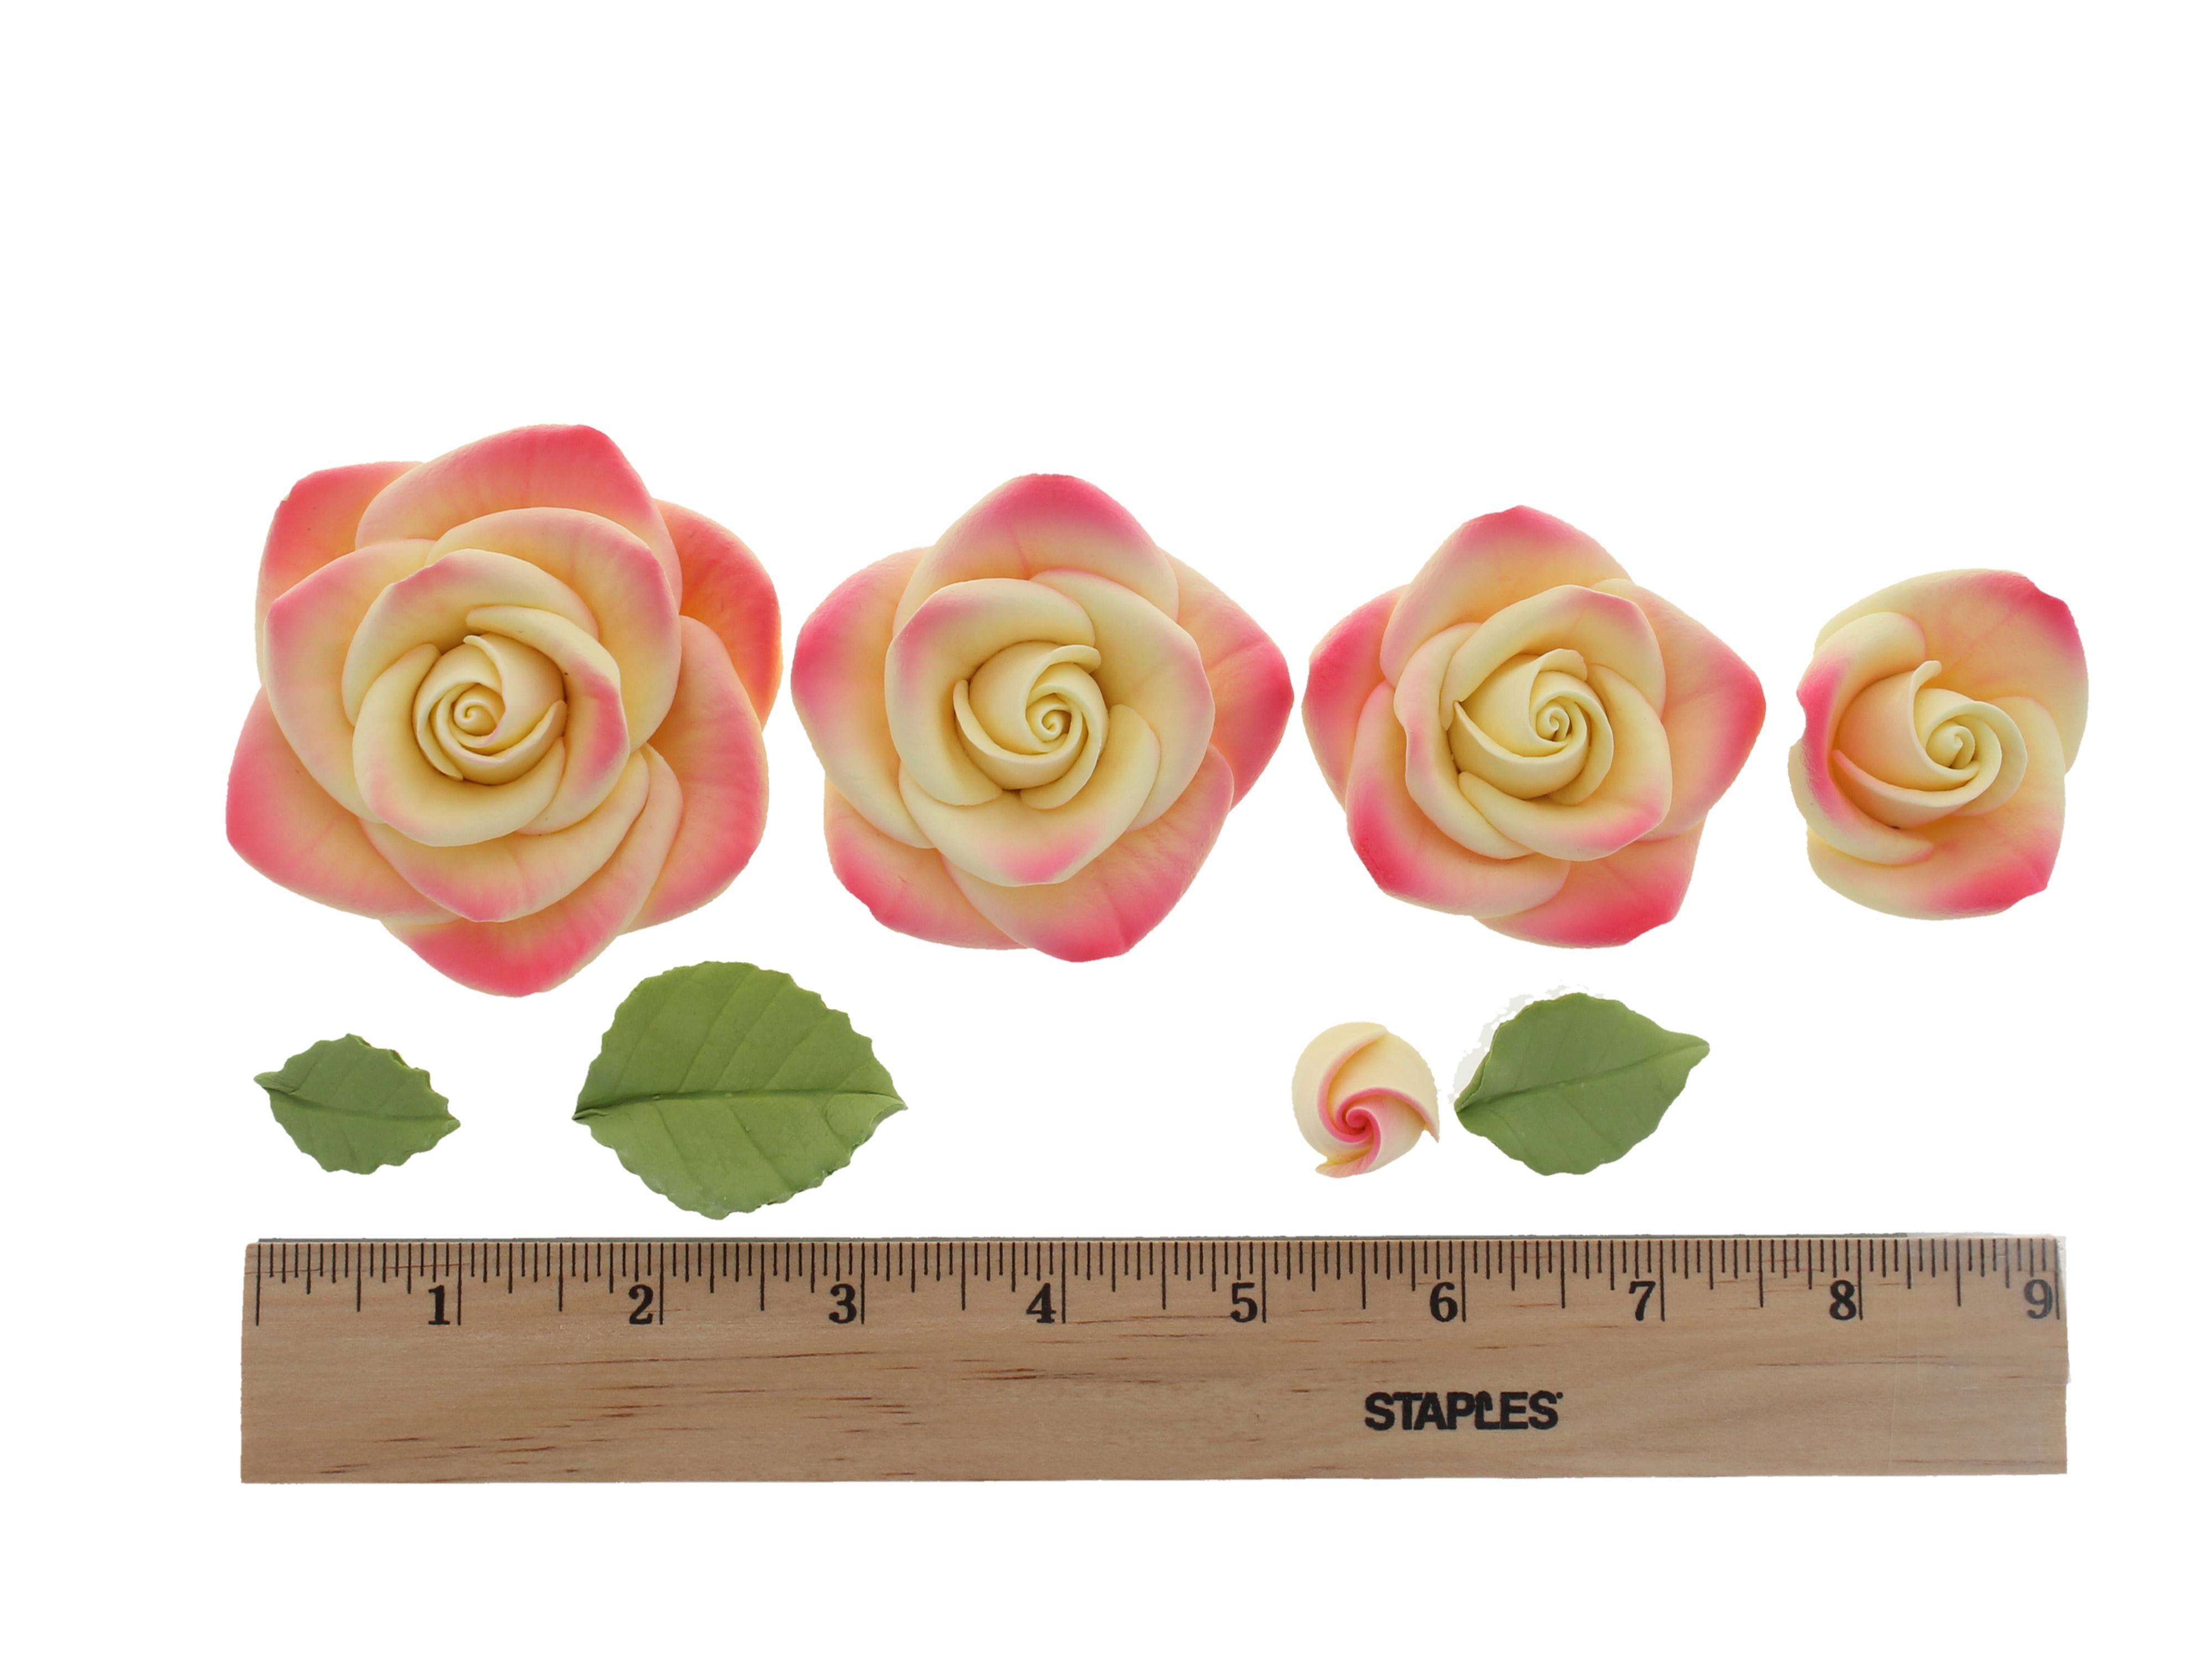 https://www.globalsugarart.com/media/product/395/global-sugar-art-exquisite-rose-leaf-edible-sugar-cake-flowers-kit-yellow-with-rose-by-chef-alan-tetreault-7e2.jpg